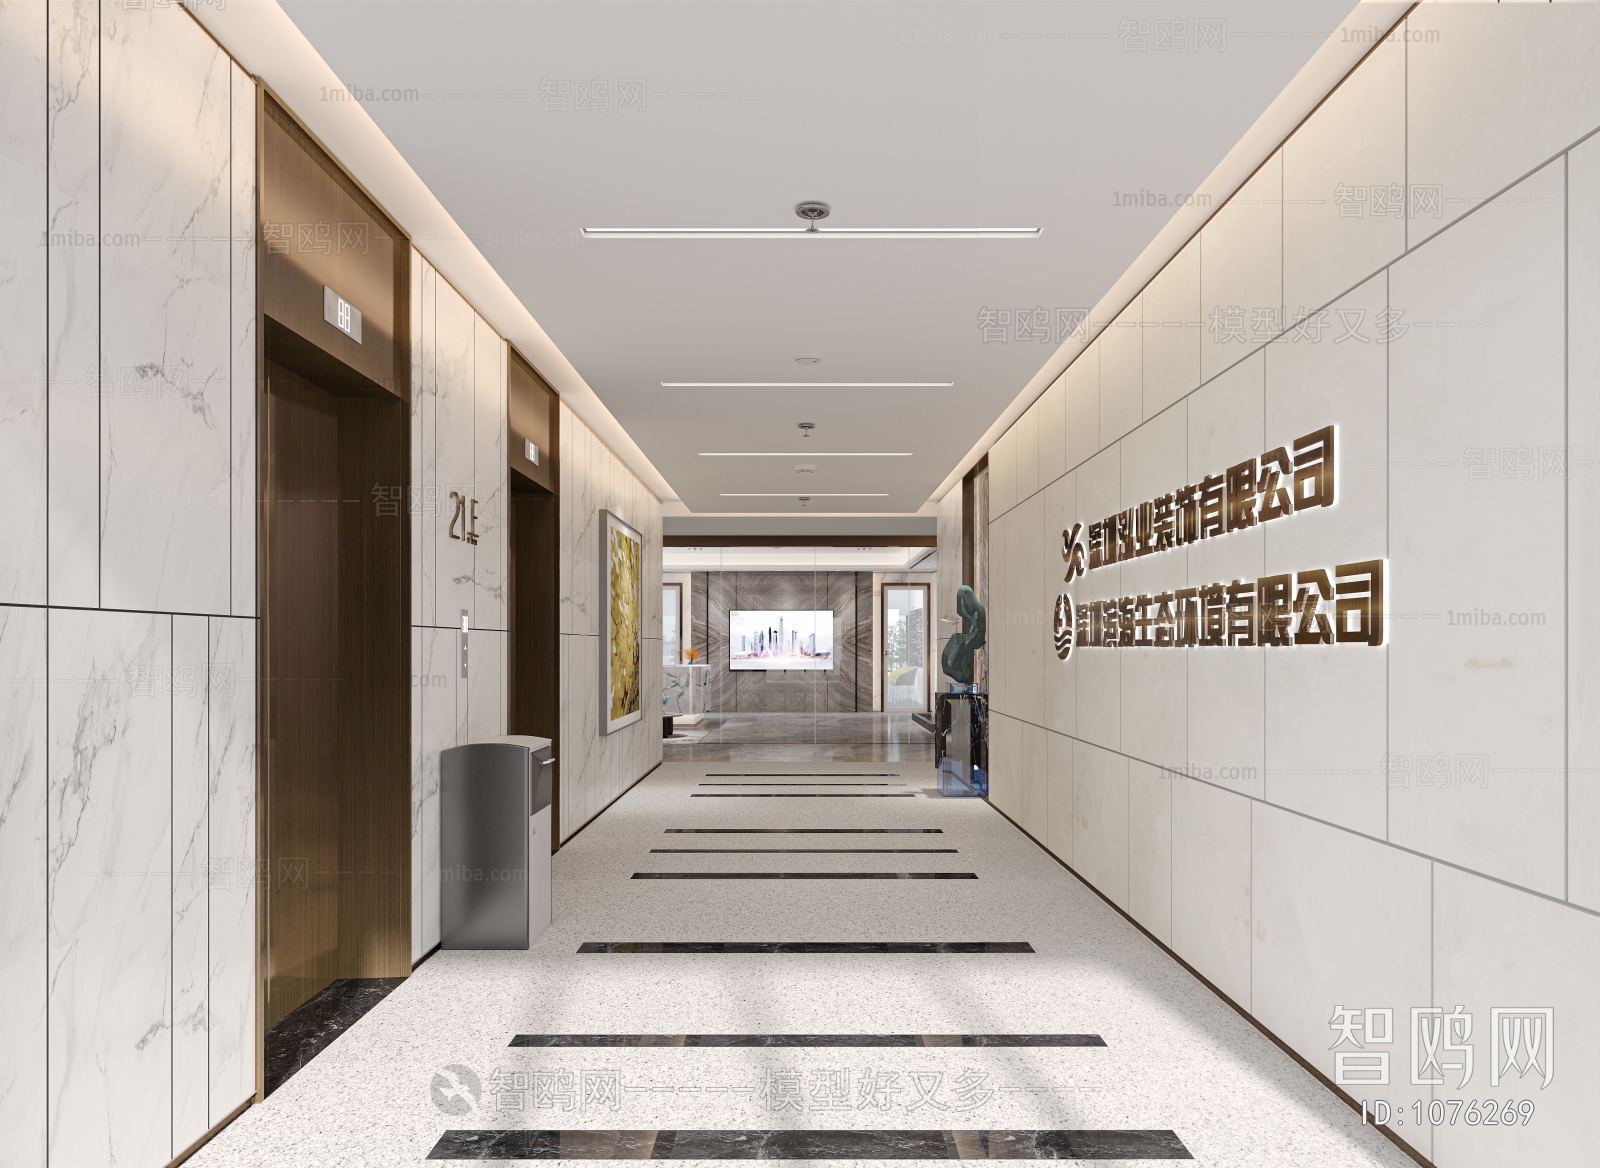 Modern Corridor/elevator Hall